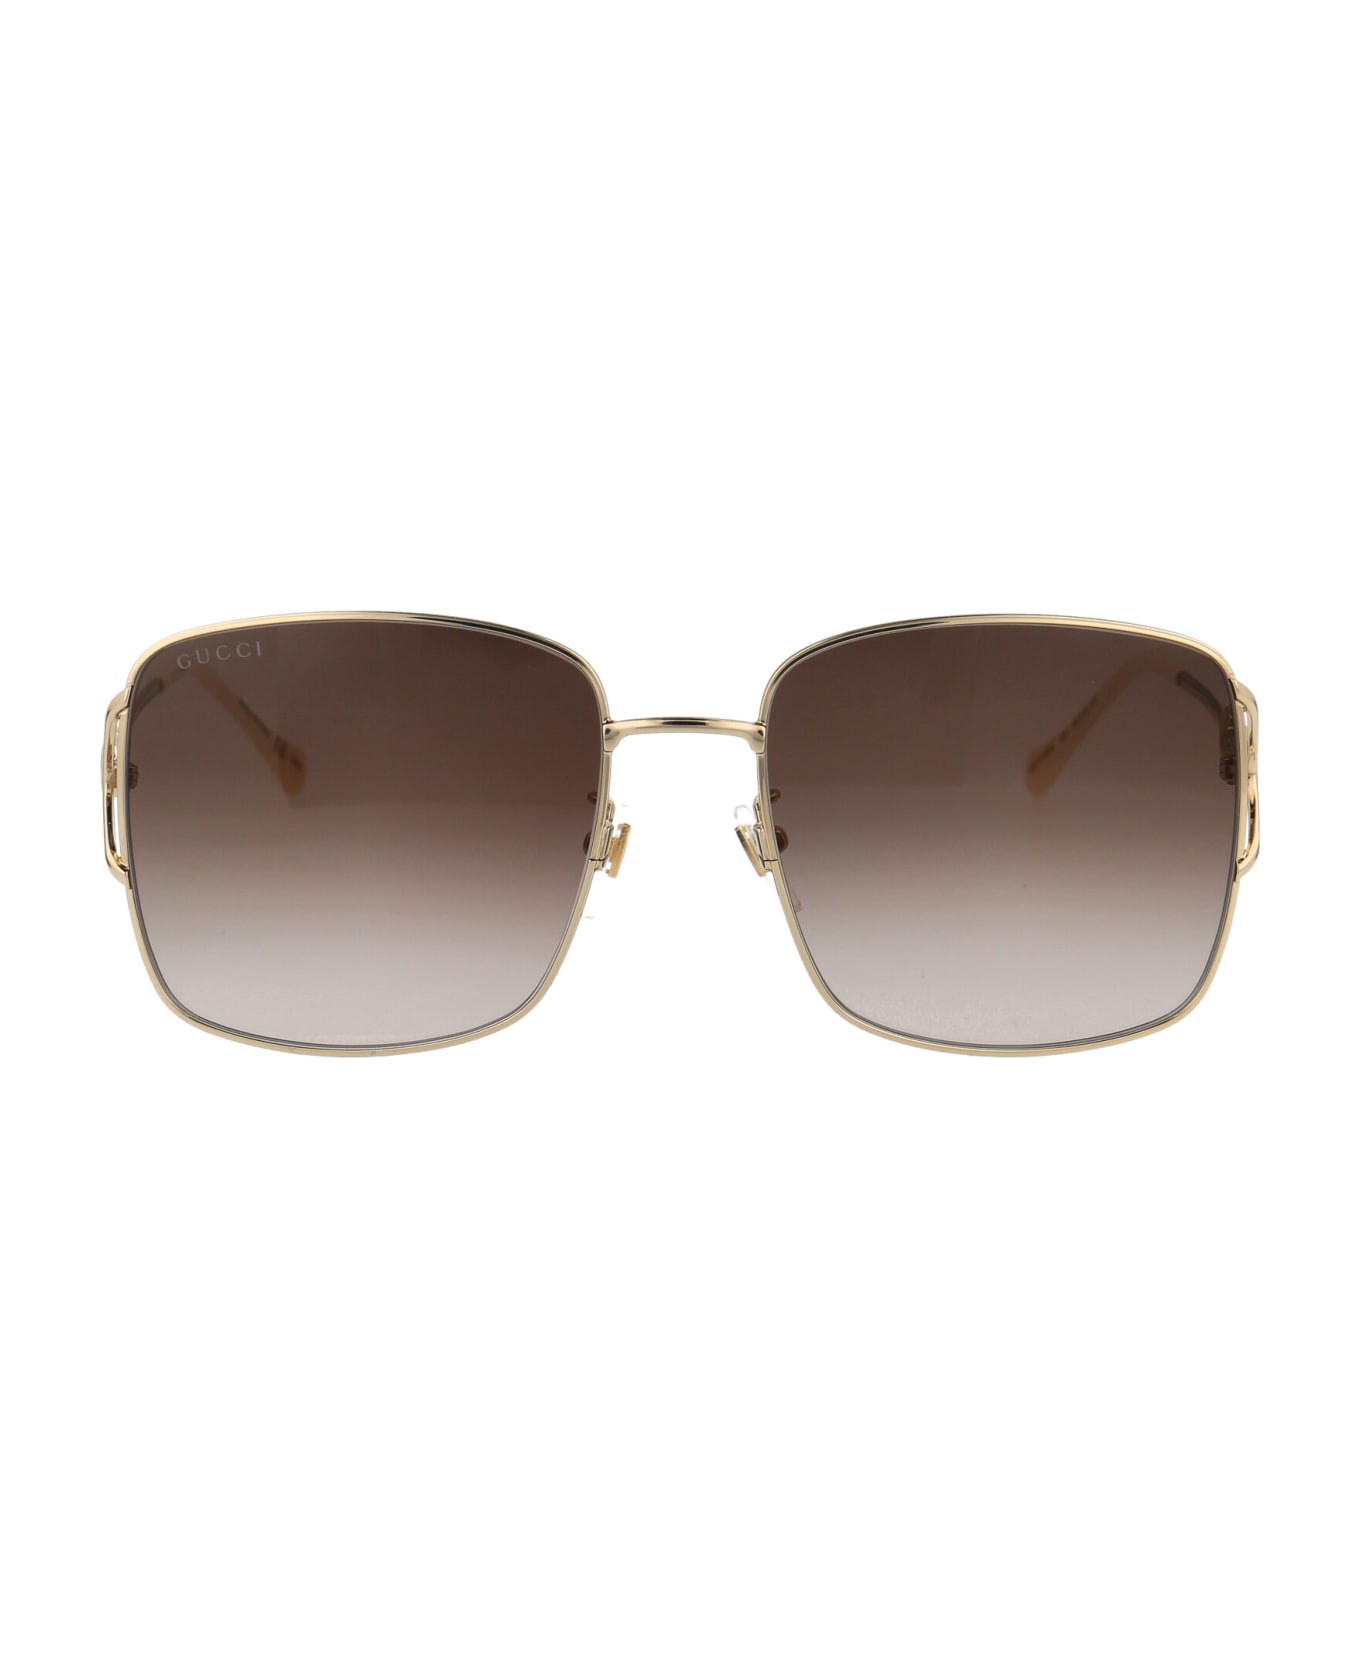 Gucci Eyewear Gg1018sk Sunglasses - 003 GOLD GOLD BROWN サングラス